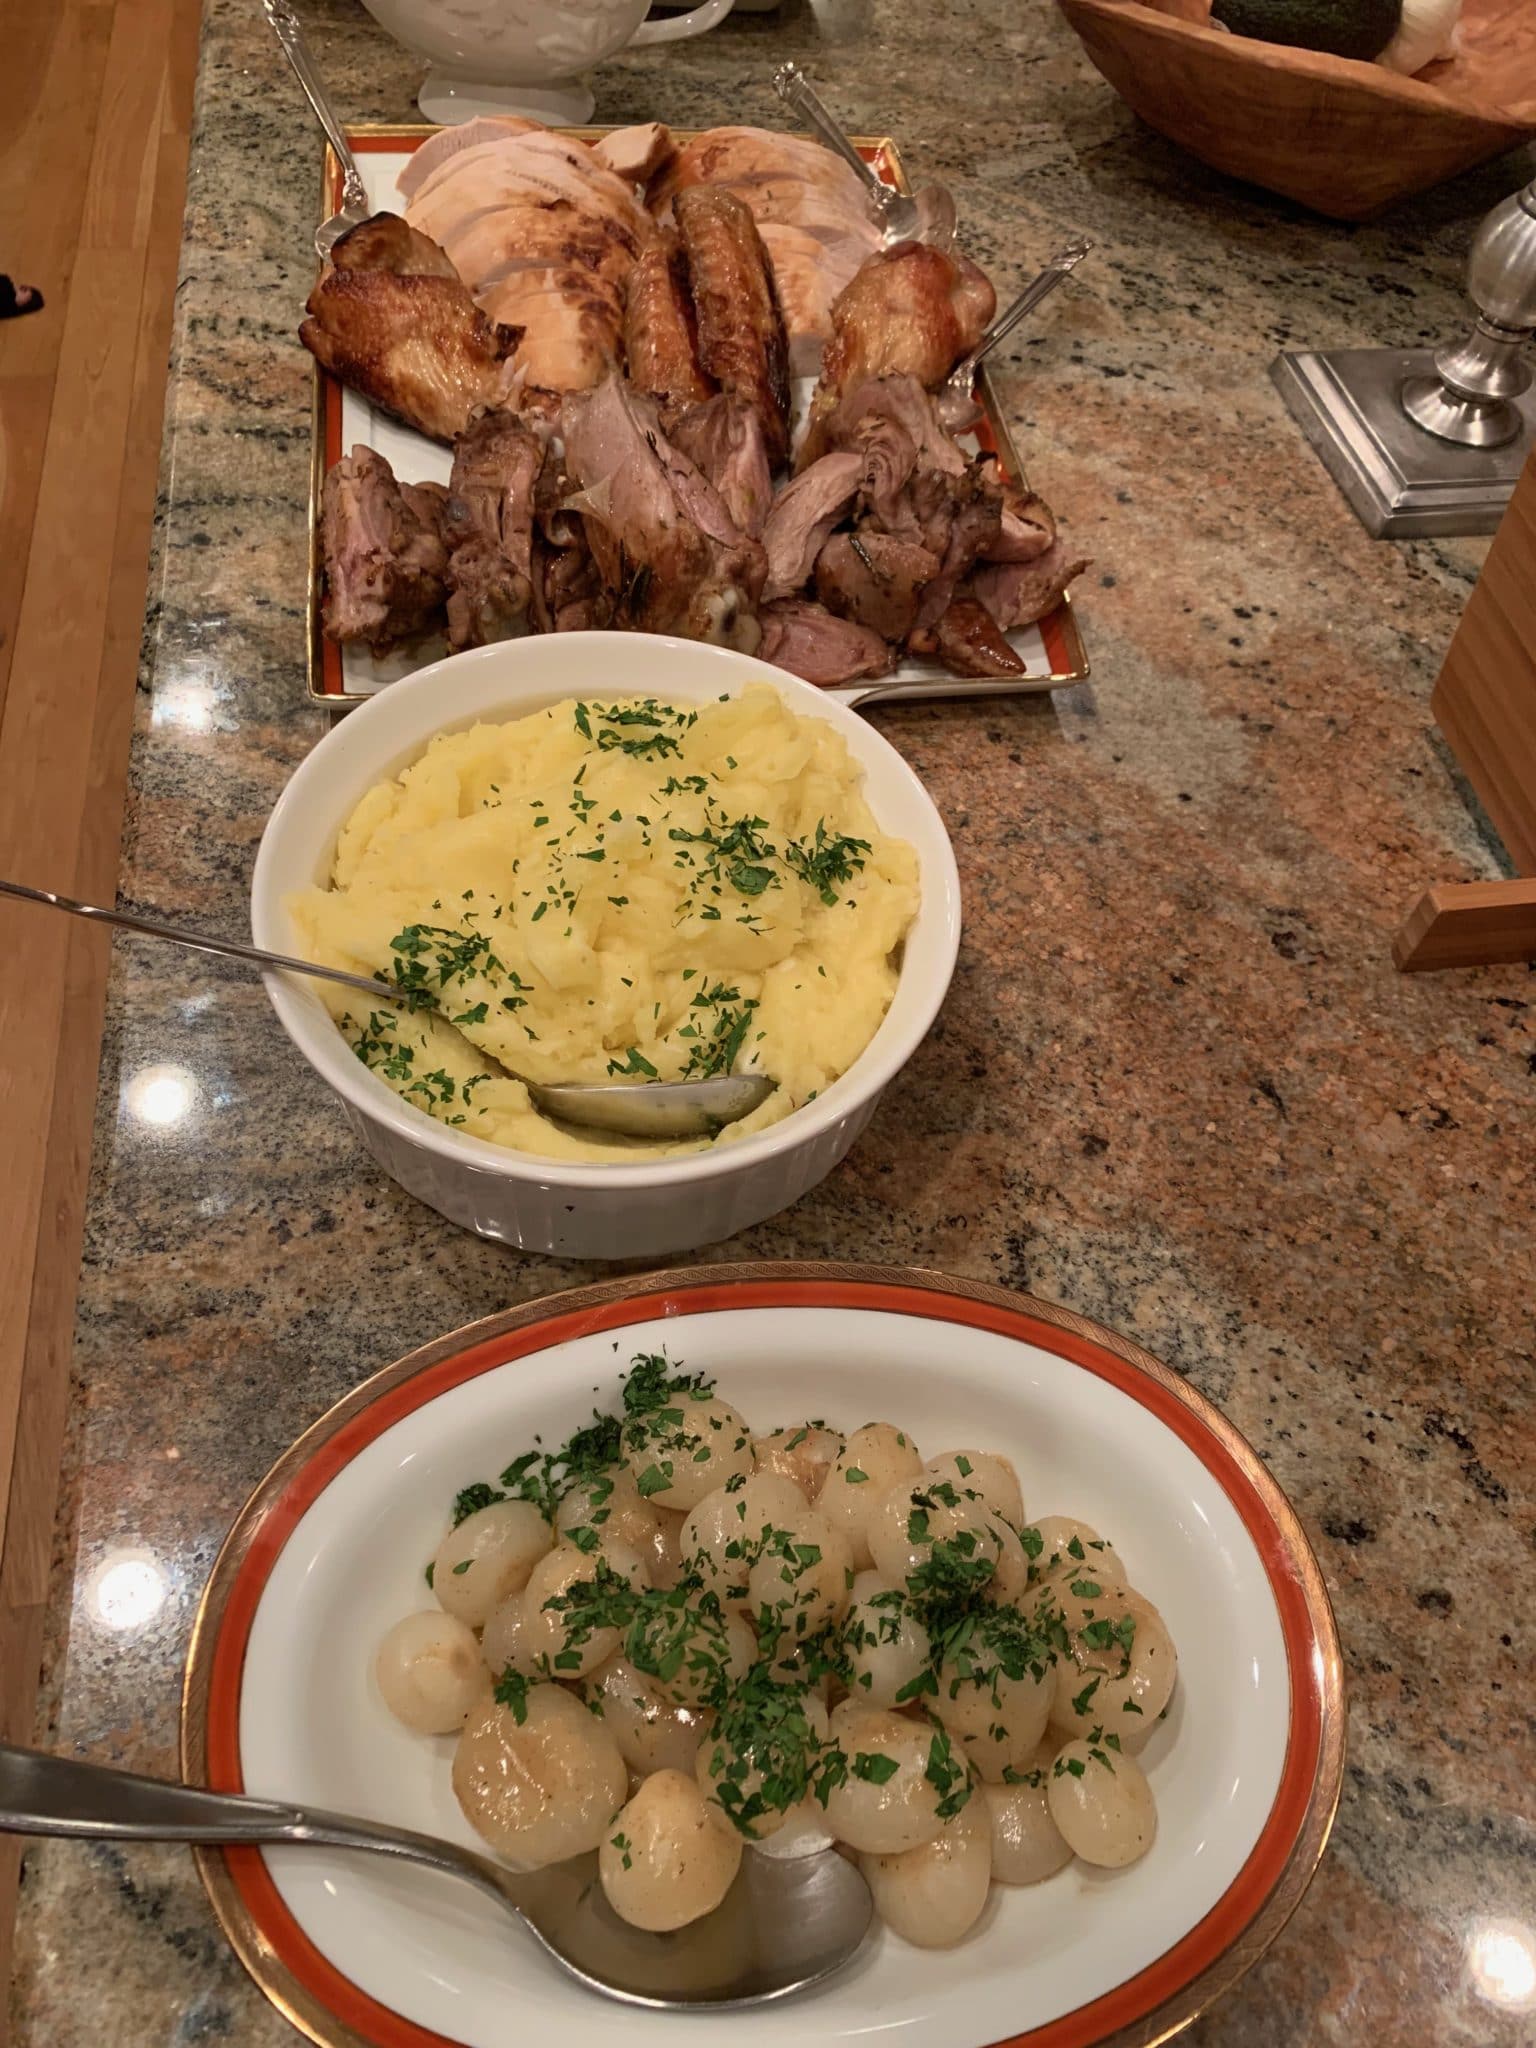 Turkey, mash potatoes and onions